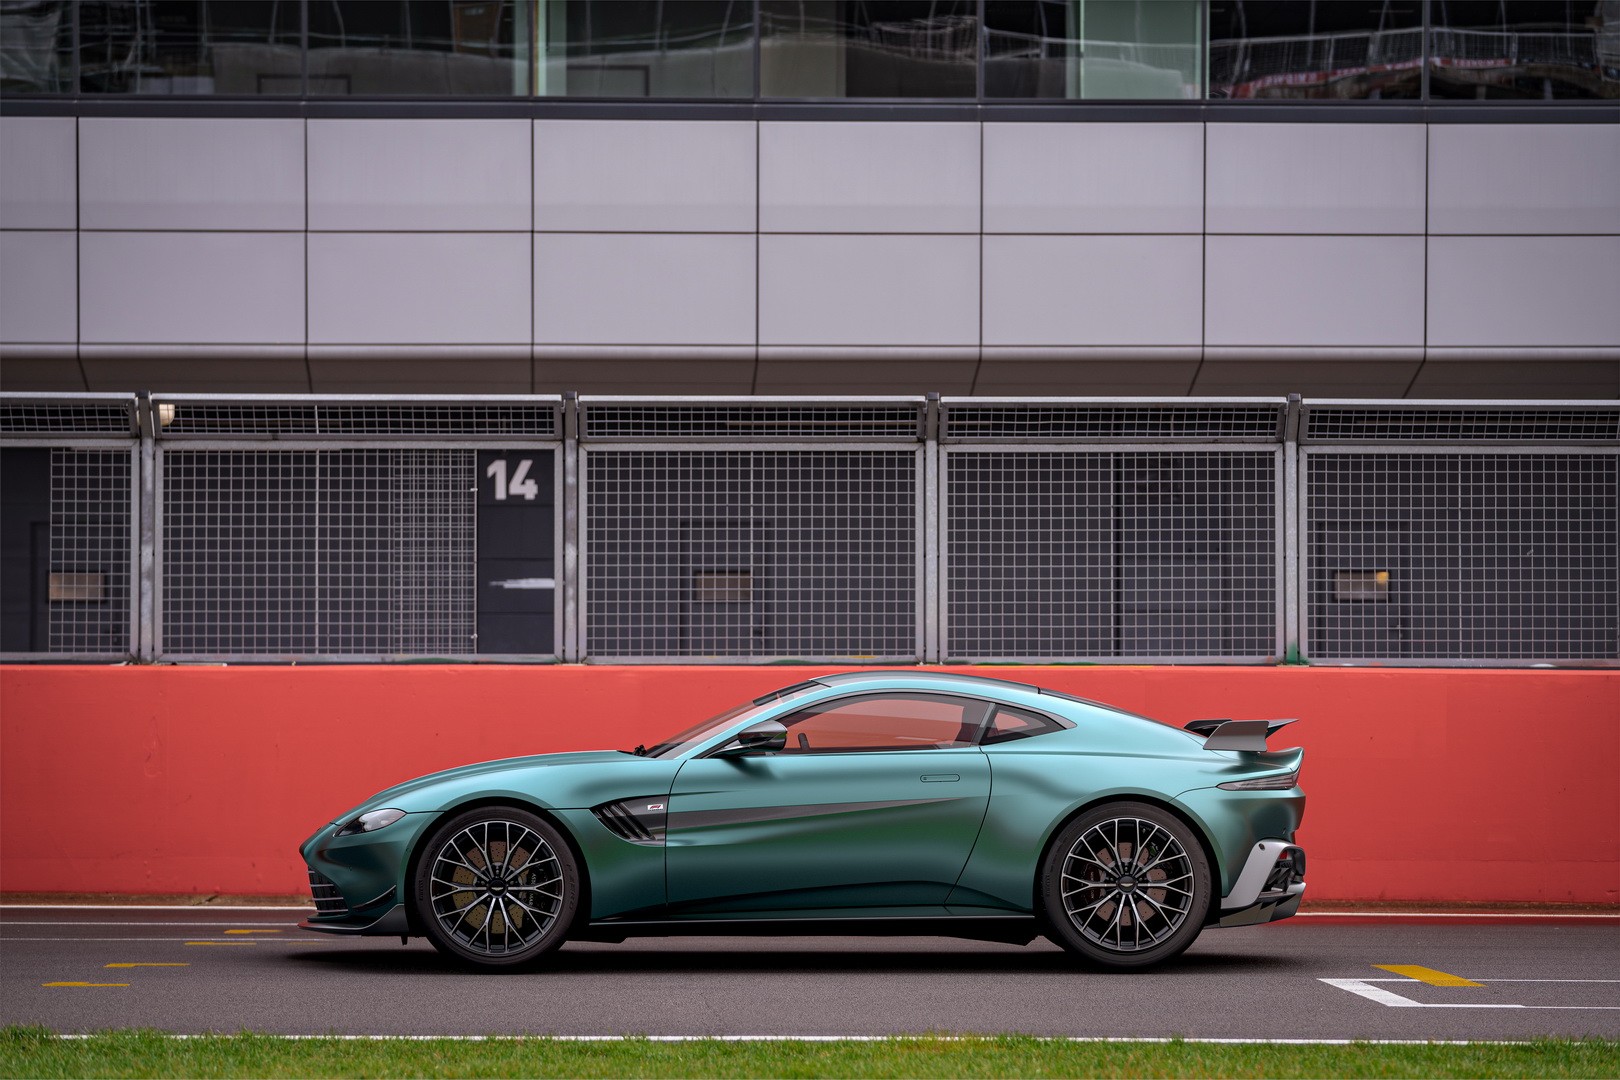 Aston Martin Unveils Vantage F1 Edition Based on Official Formula 1